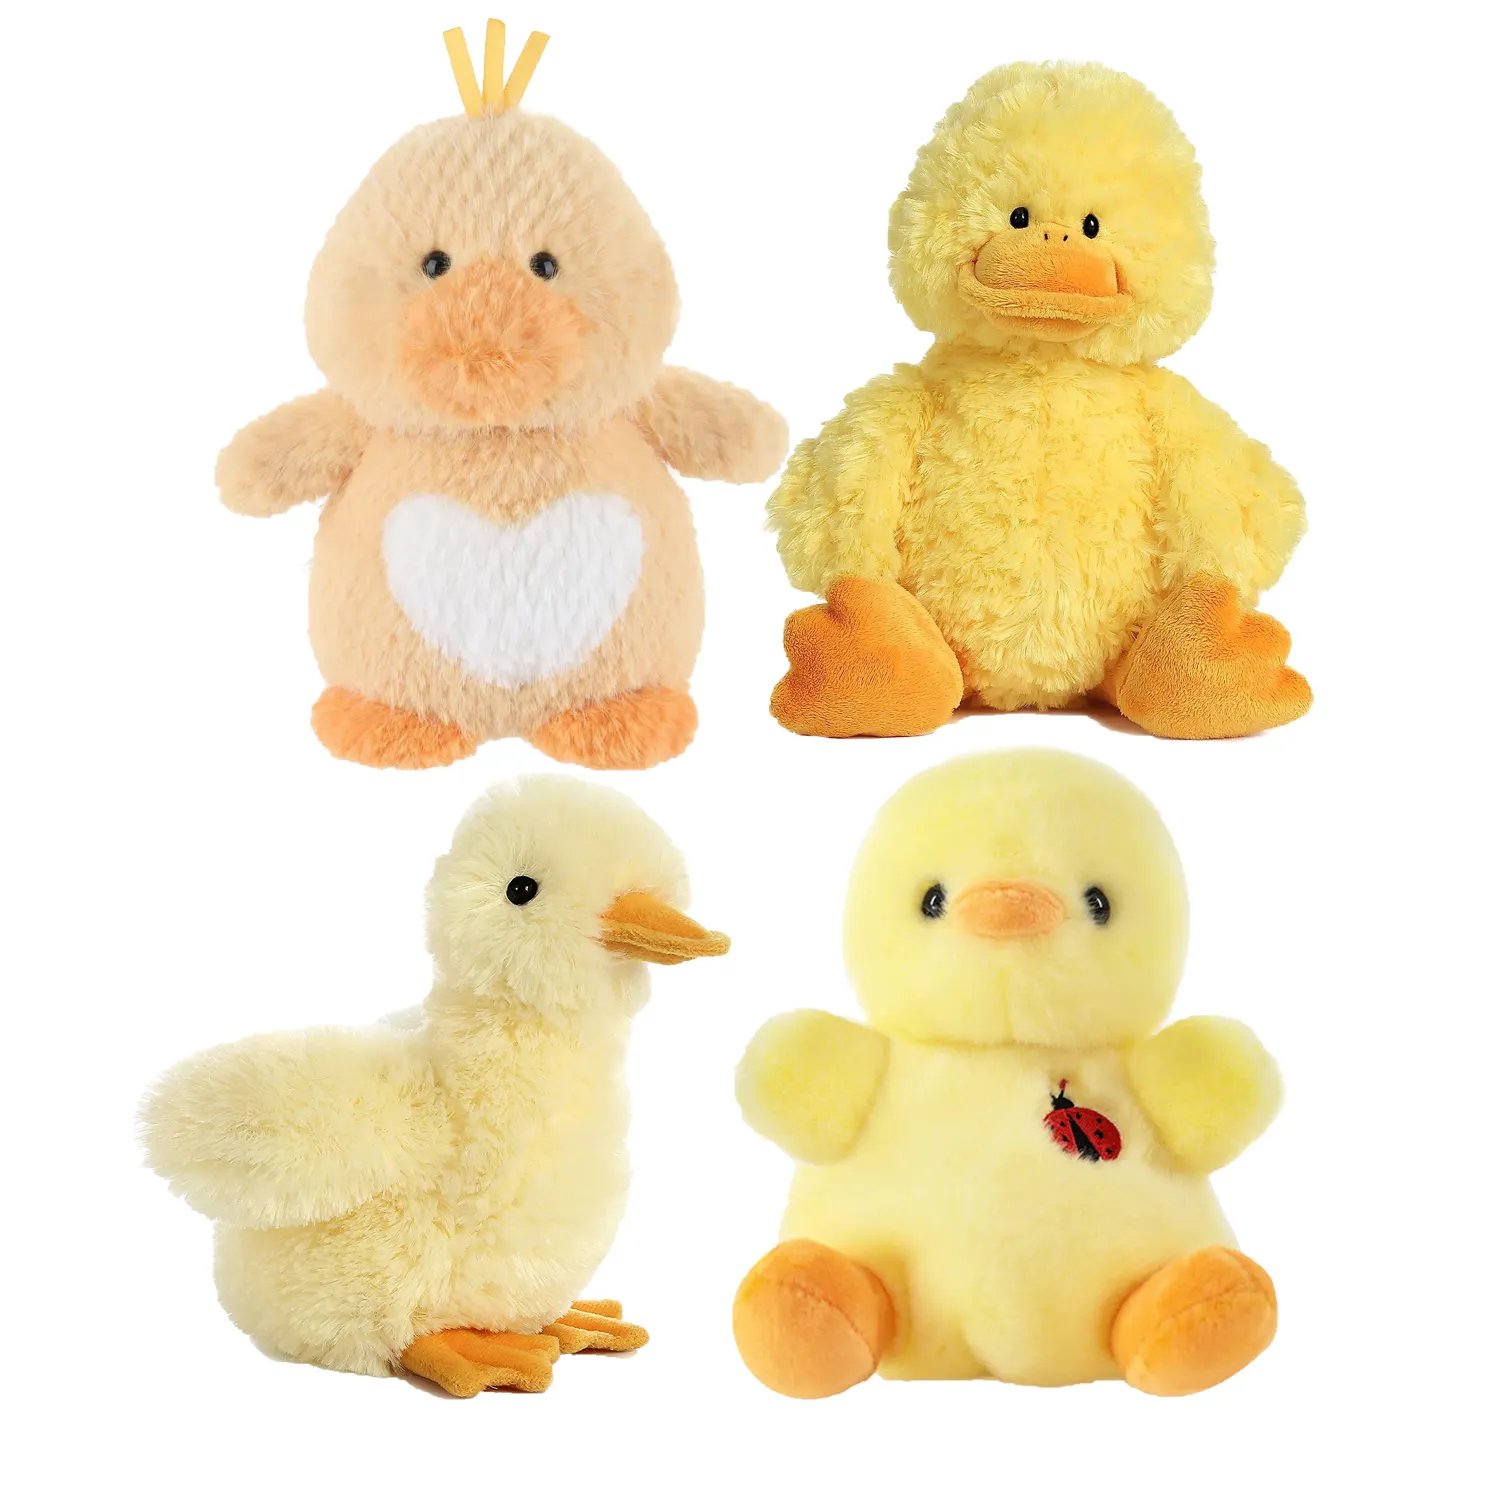 Custom Premium Easter Stuffed Duck Plush Toy Stuffed Farm Animal Yellow Duck A Huggable Soft Adorable White Baby Duckling Doll